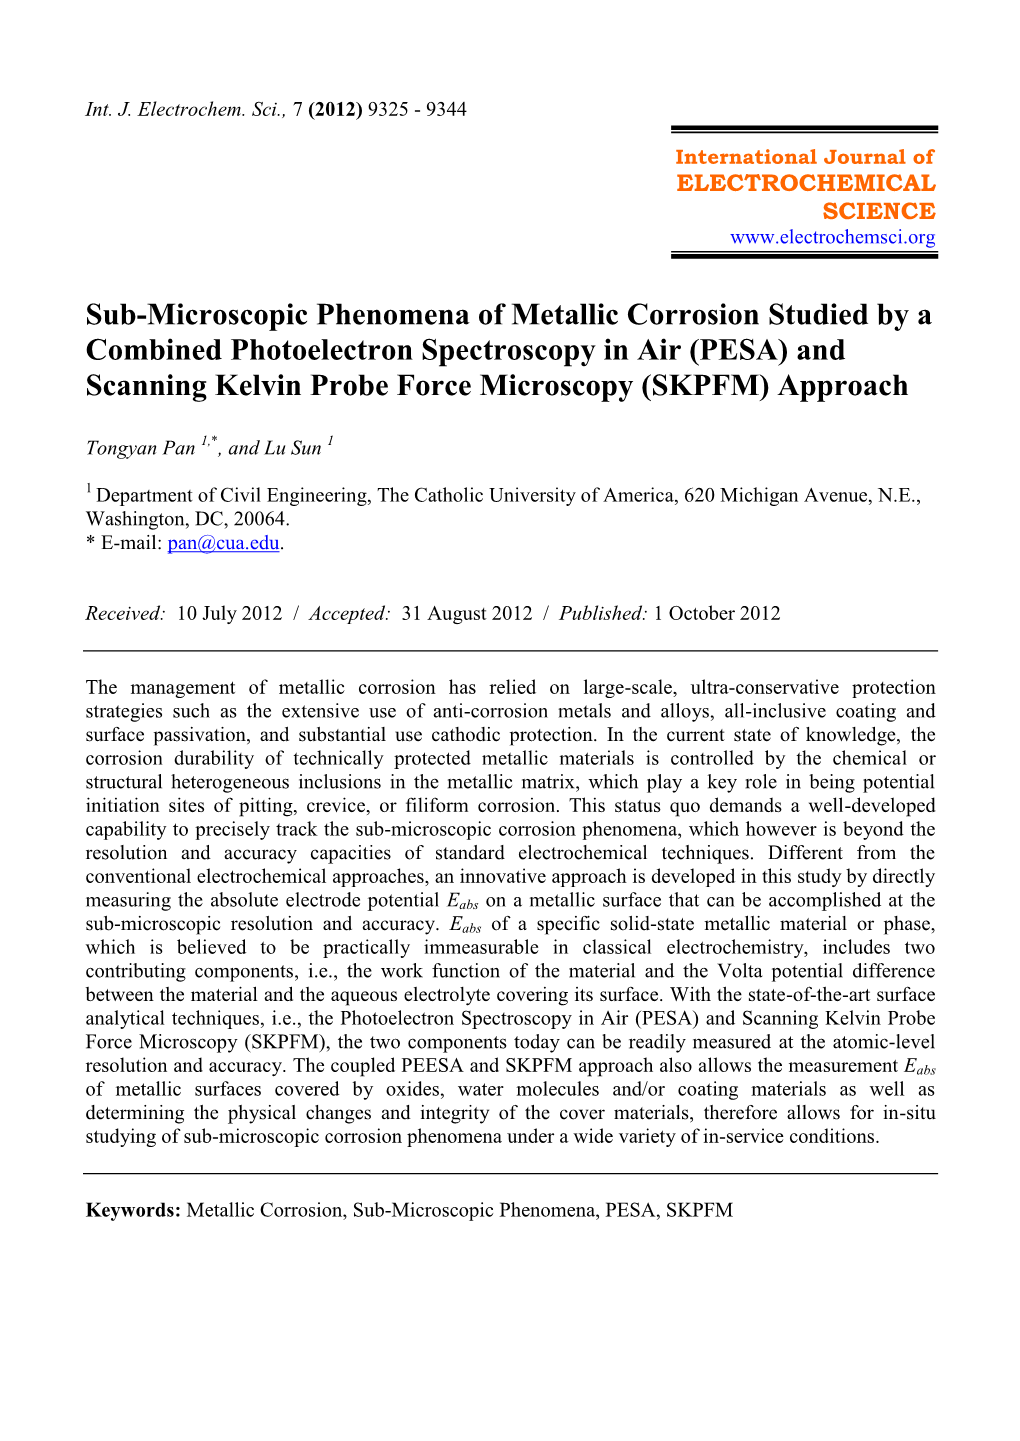 Sub-Microscopic Phenomena of Metallic Corrosion Studied by A